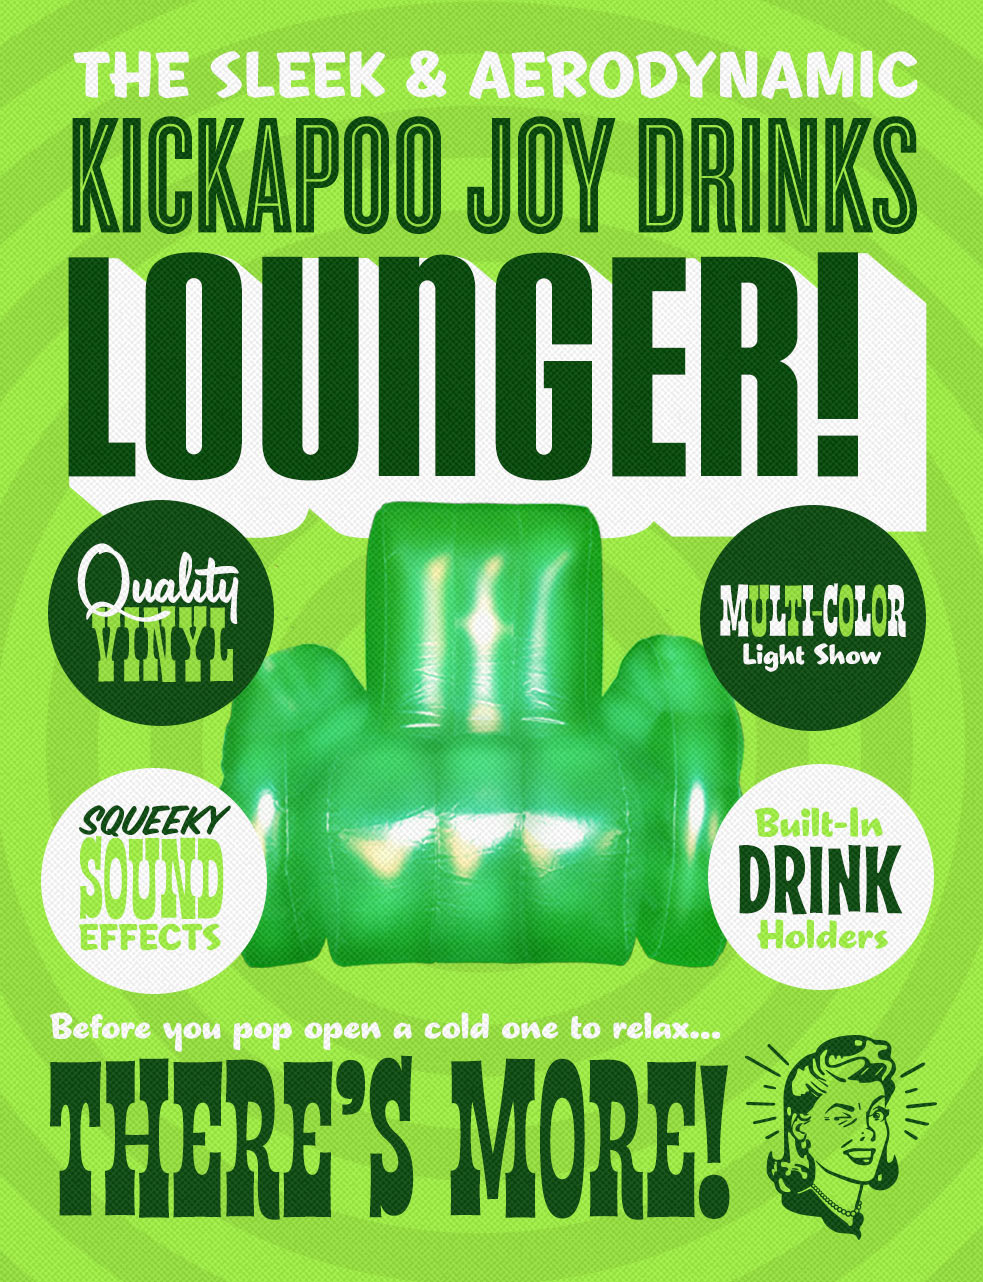 The Sleek & Aerodynamic Kickapoo Joy Drinks Lounger!